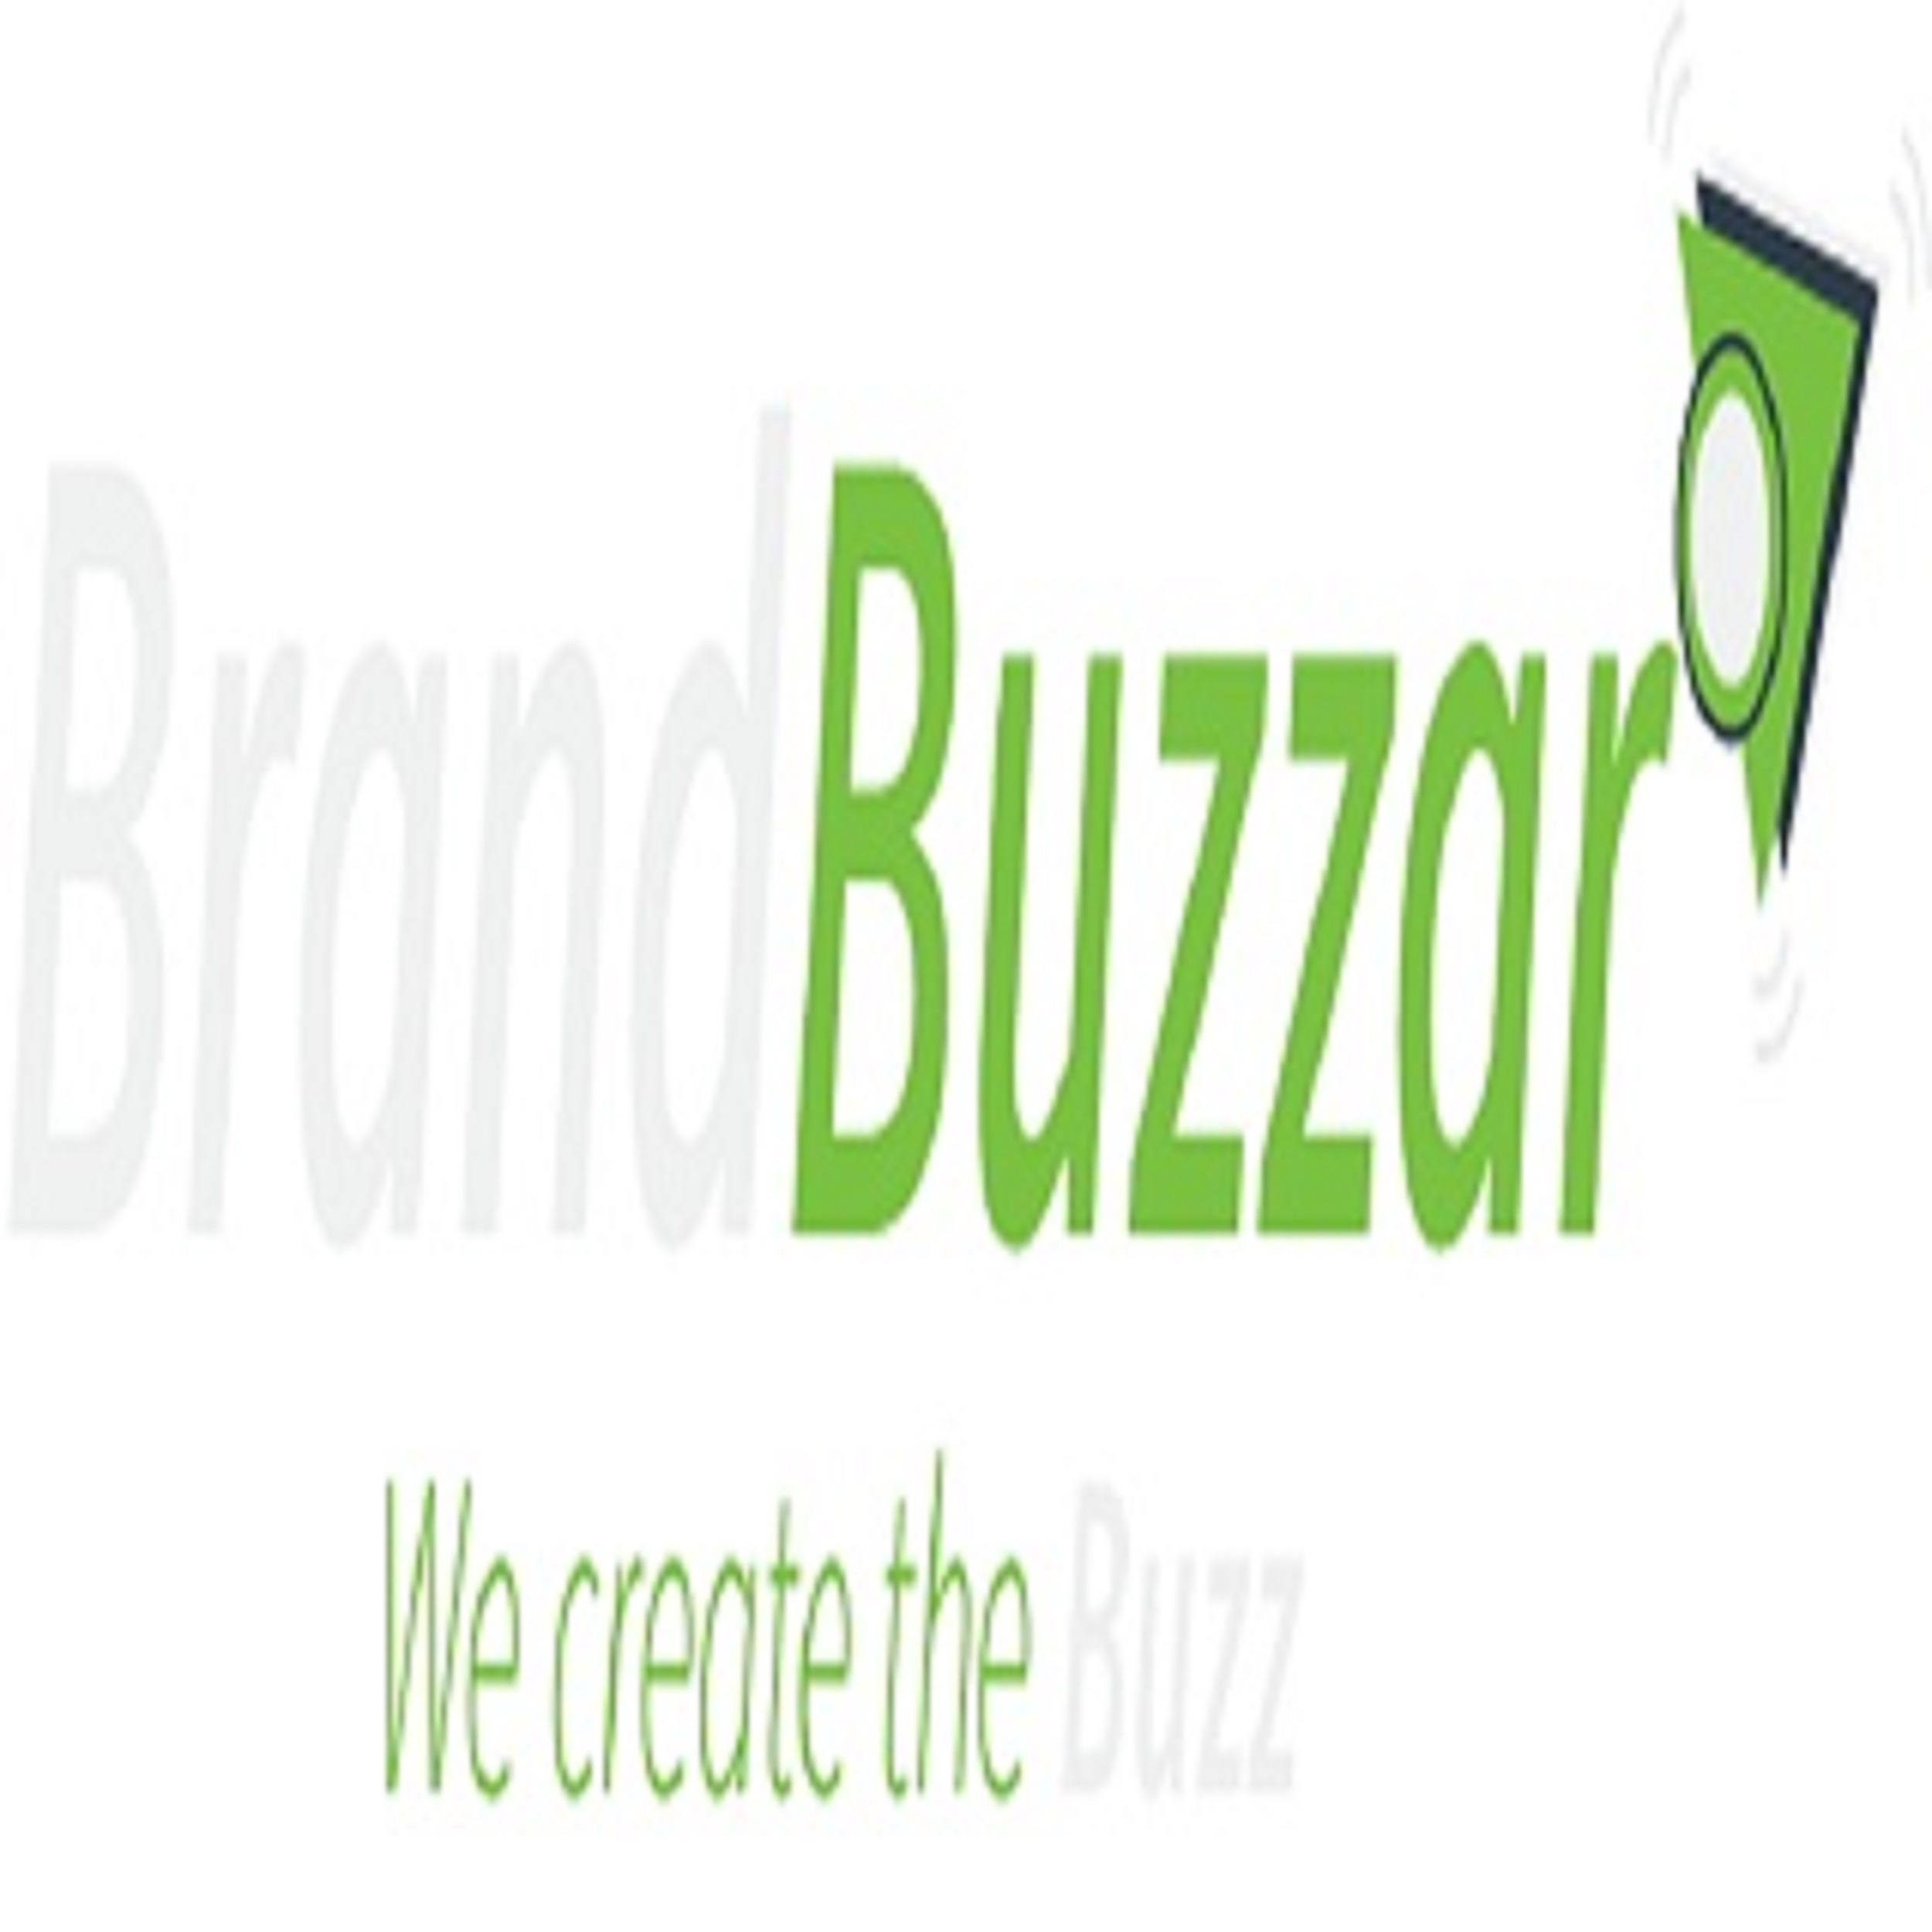 Best Web designers  BrandBuzzar